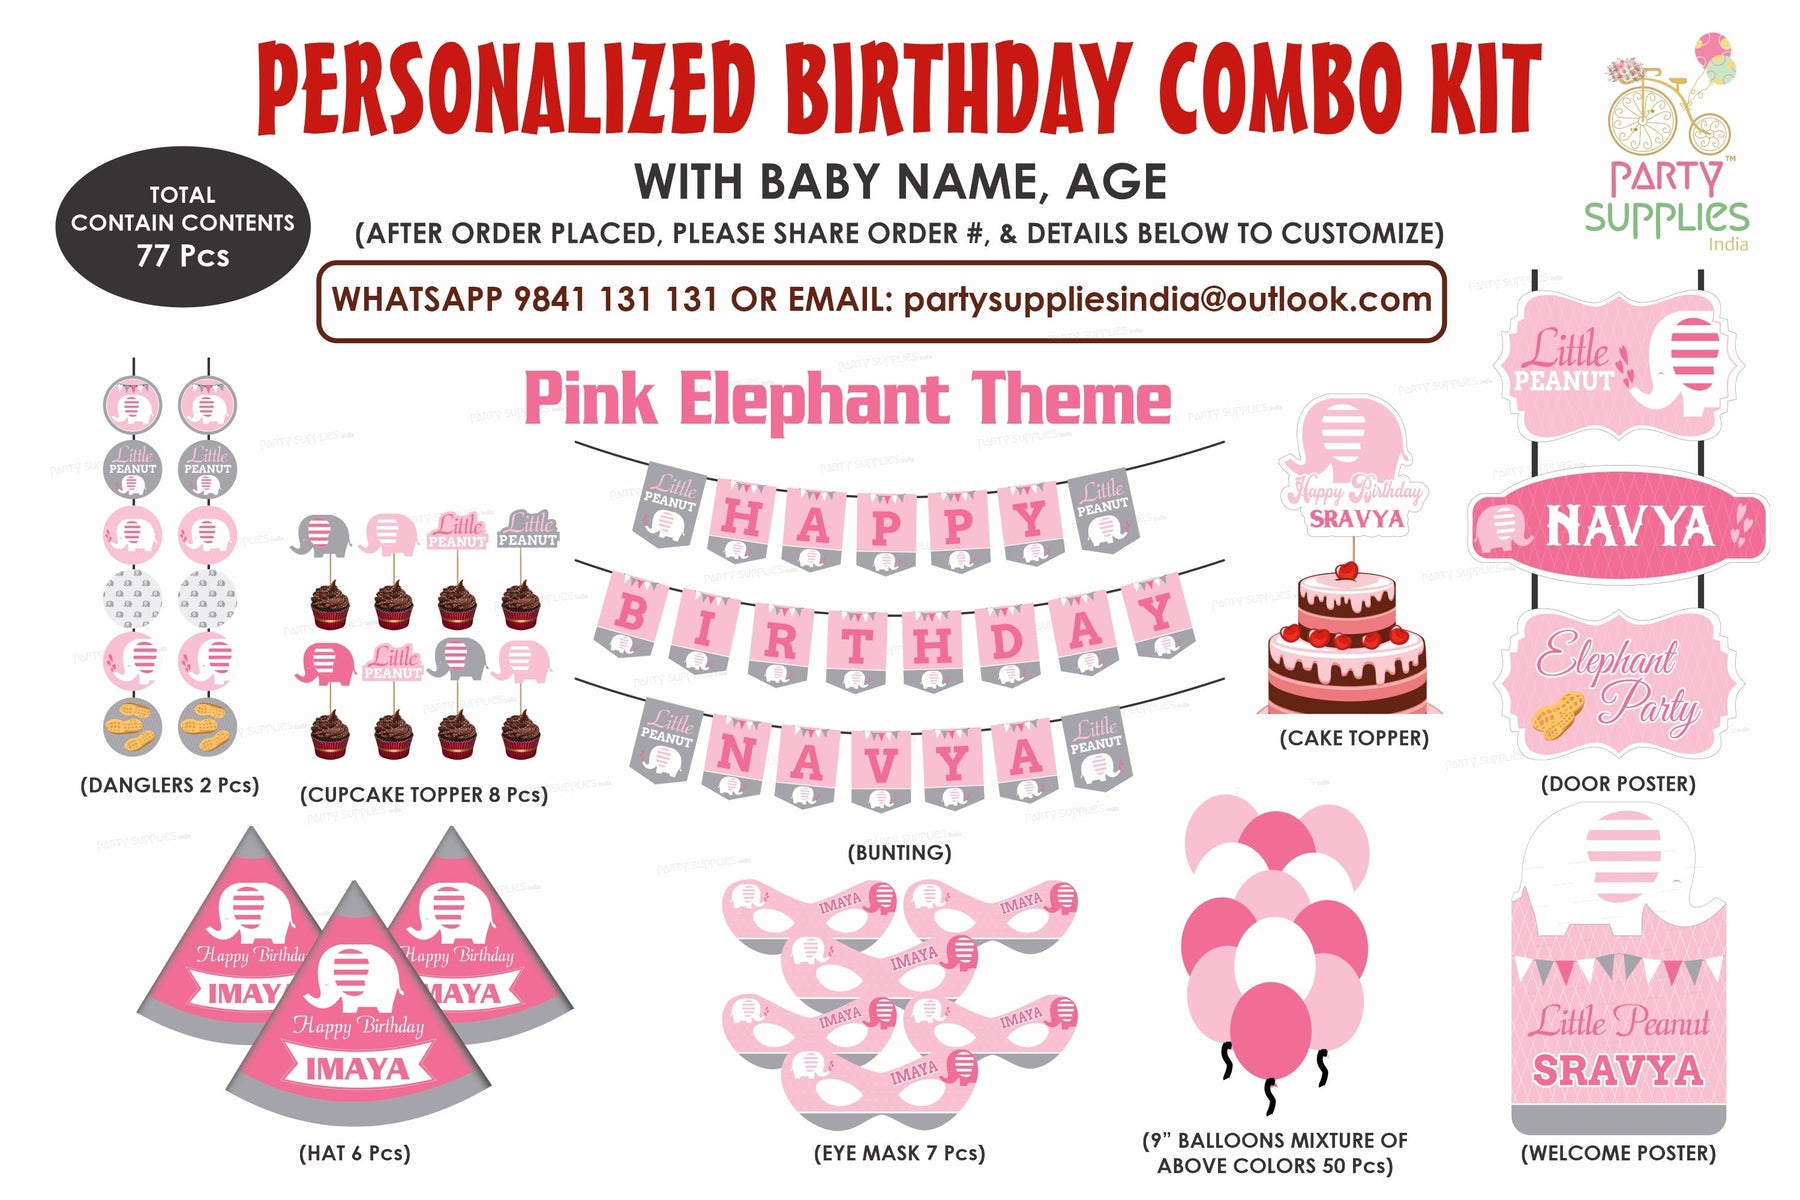 PSI Pink Elephant Theme Preferred Kit